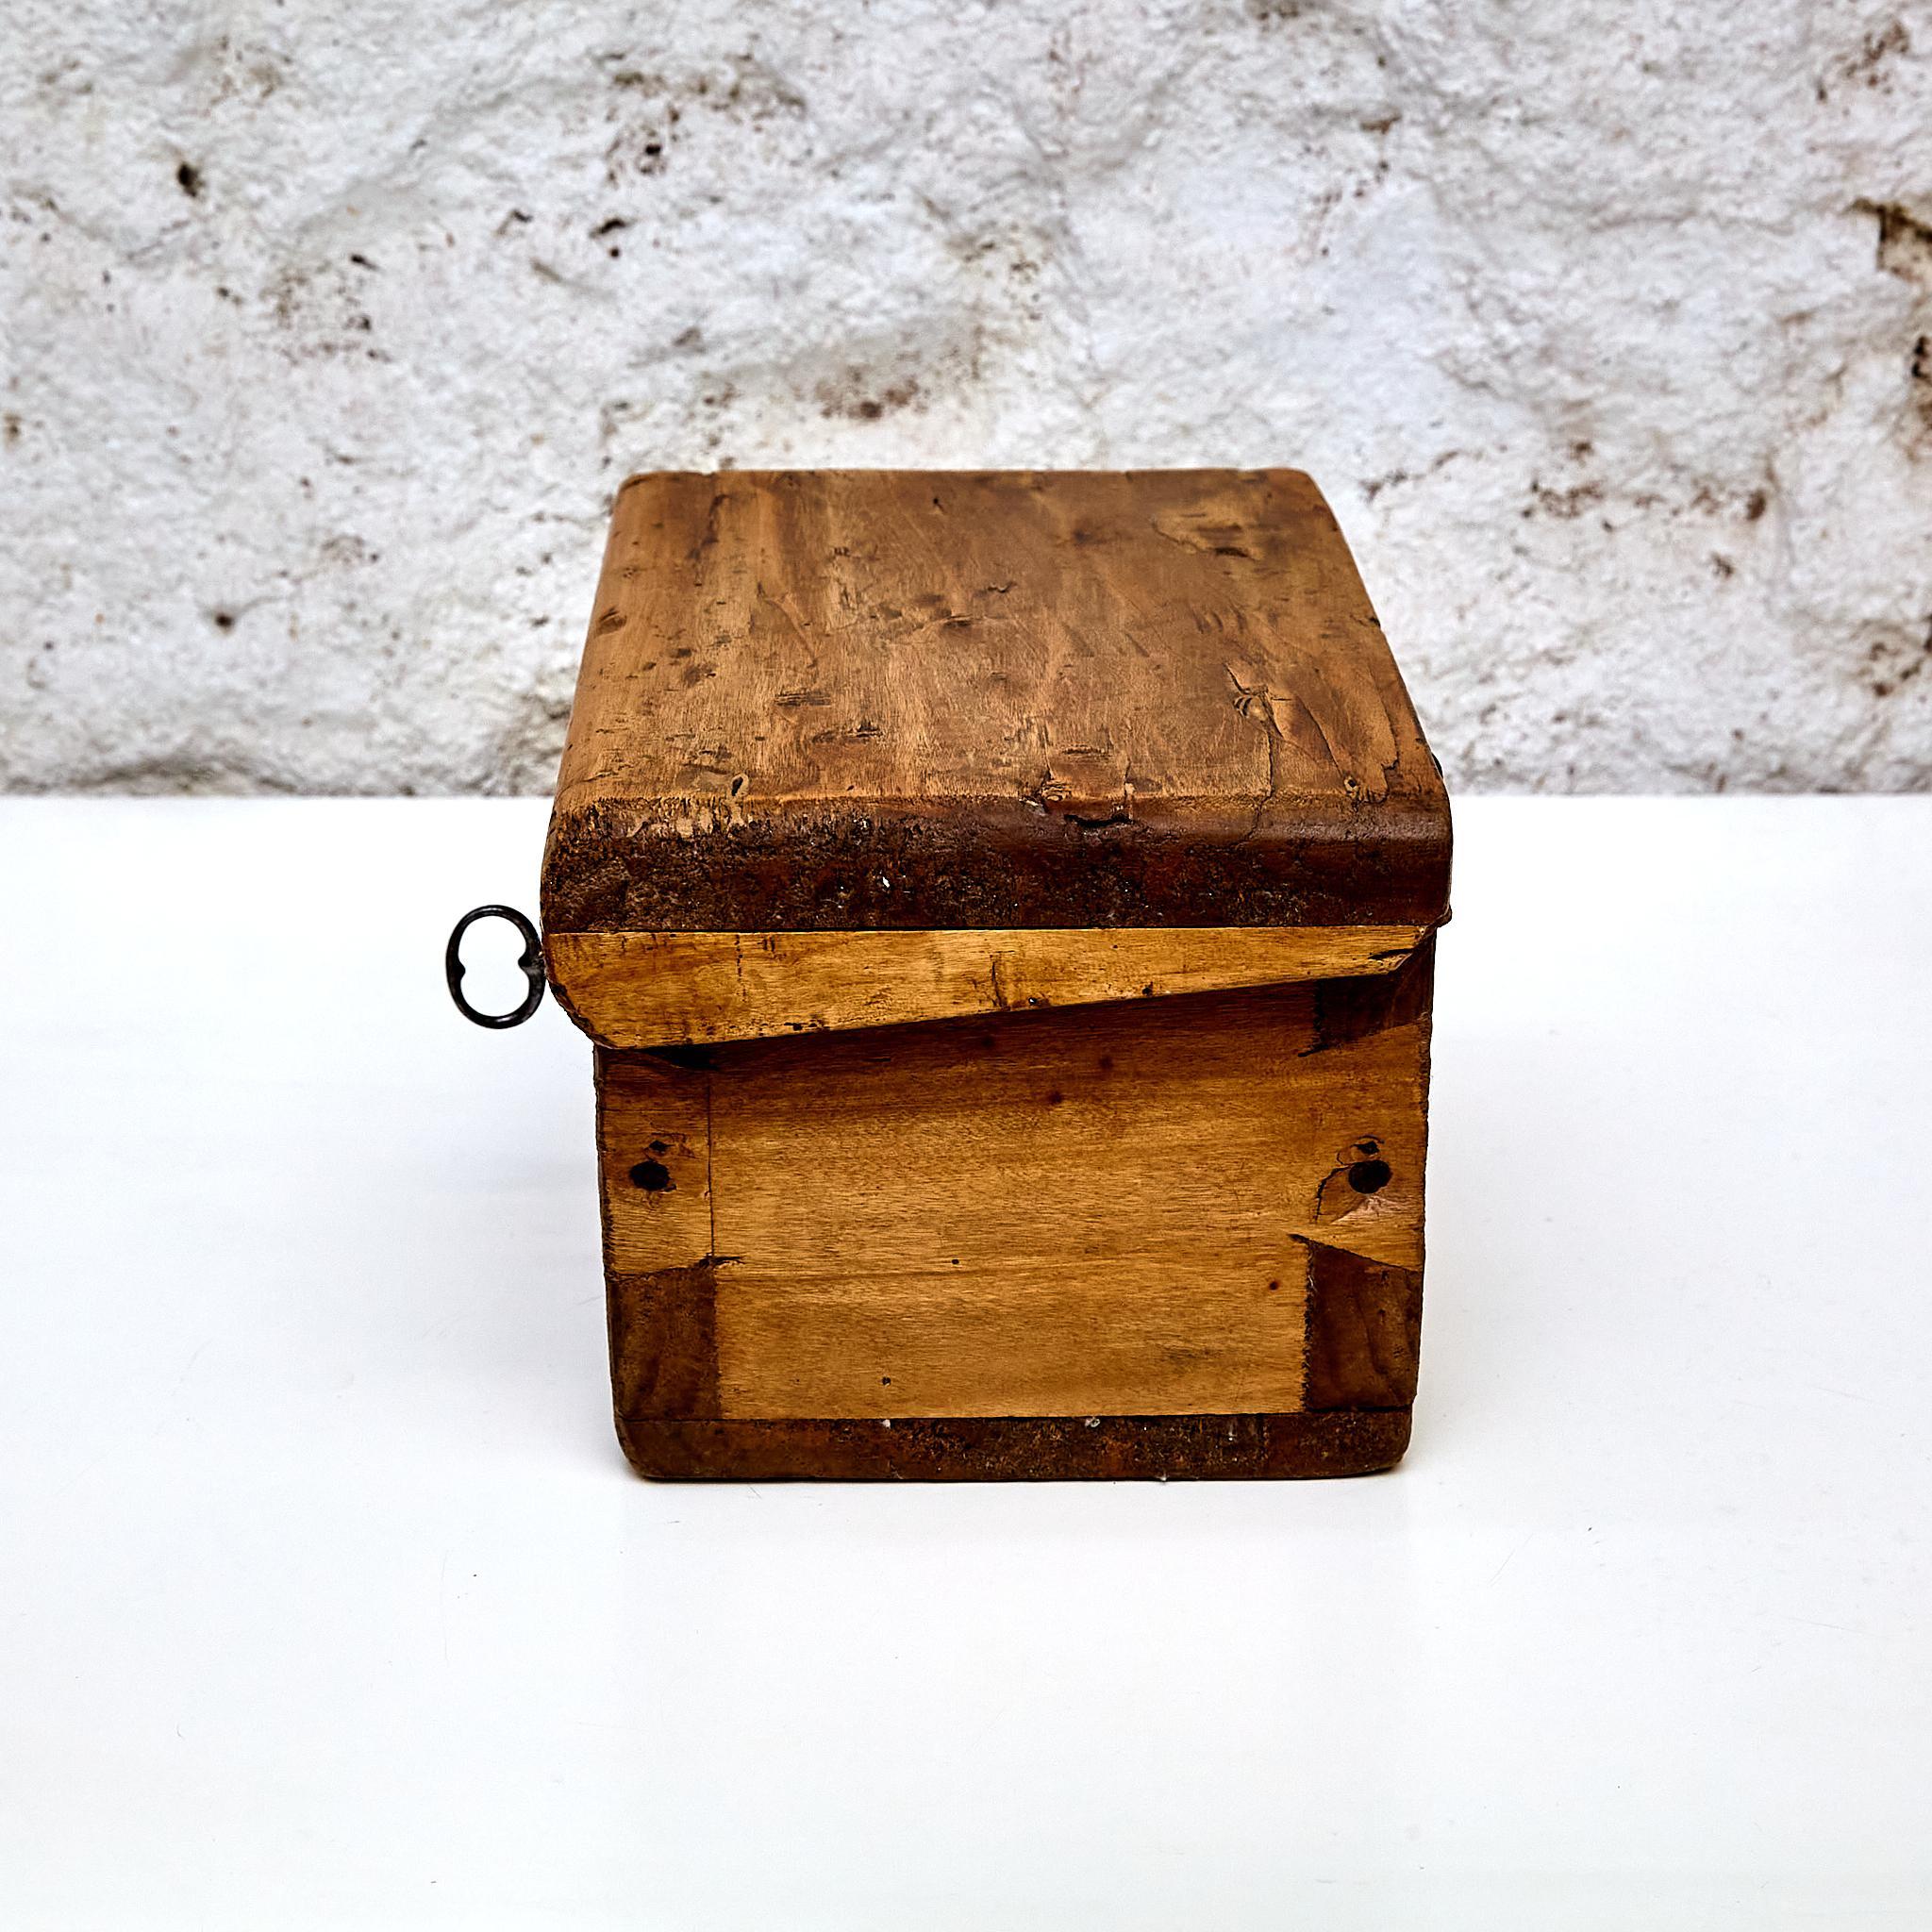 Primitive Rustic Wood Box with Key Lock, circa 1930